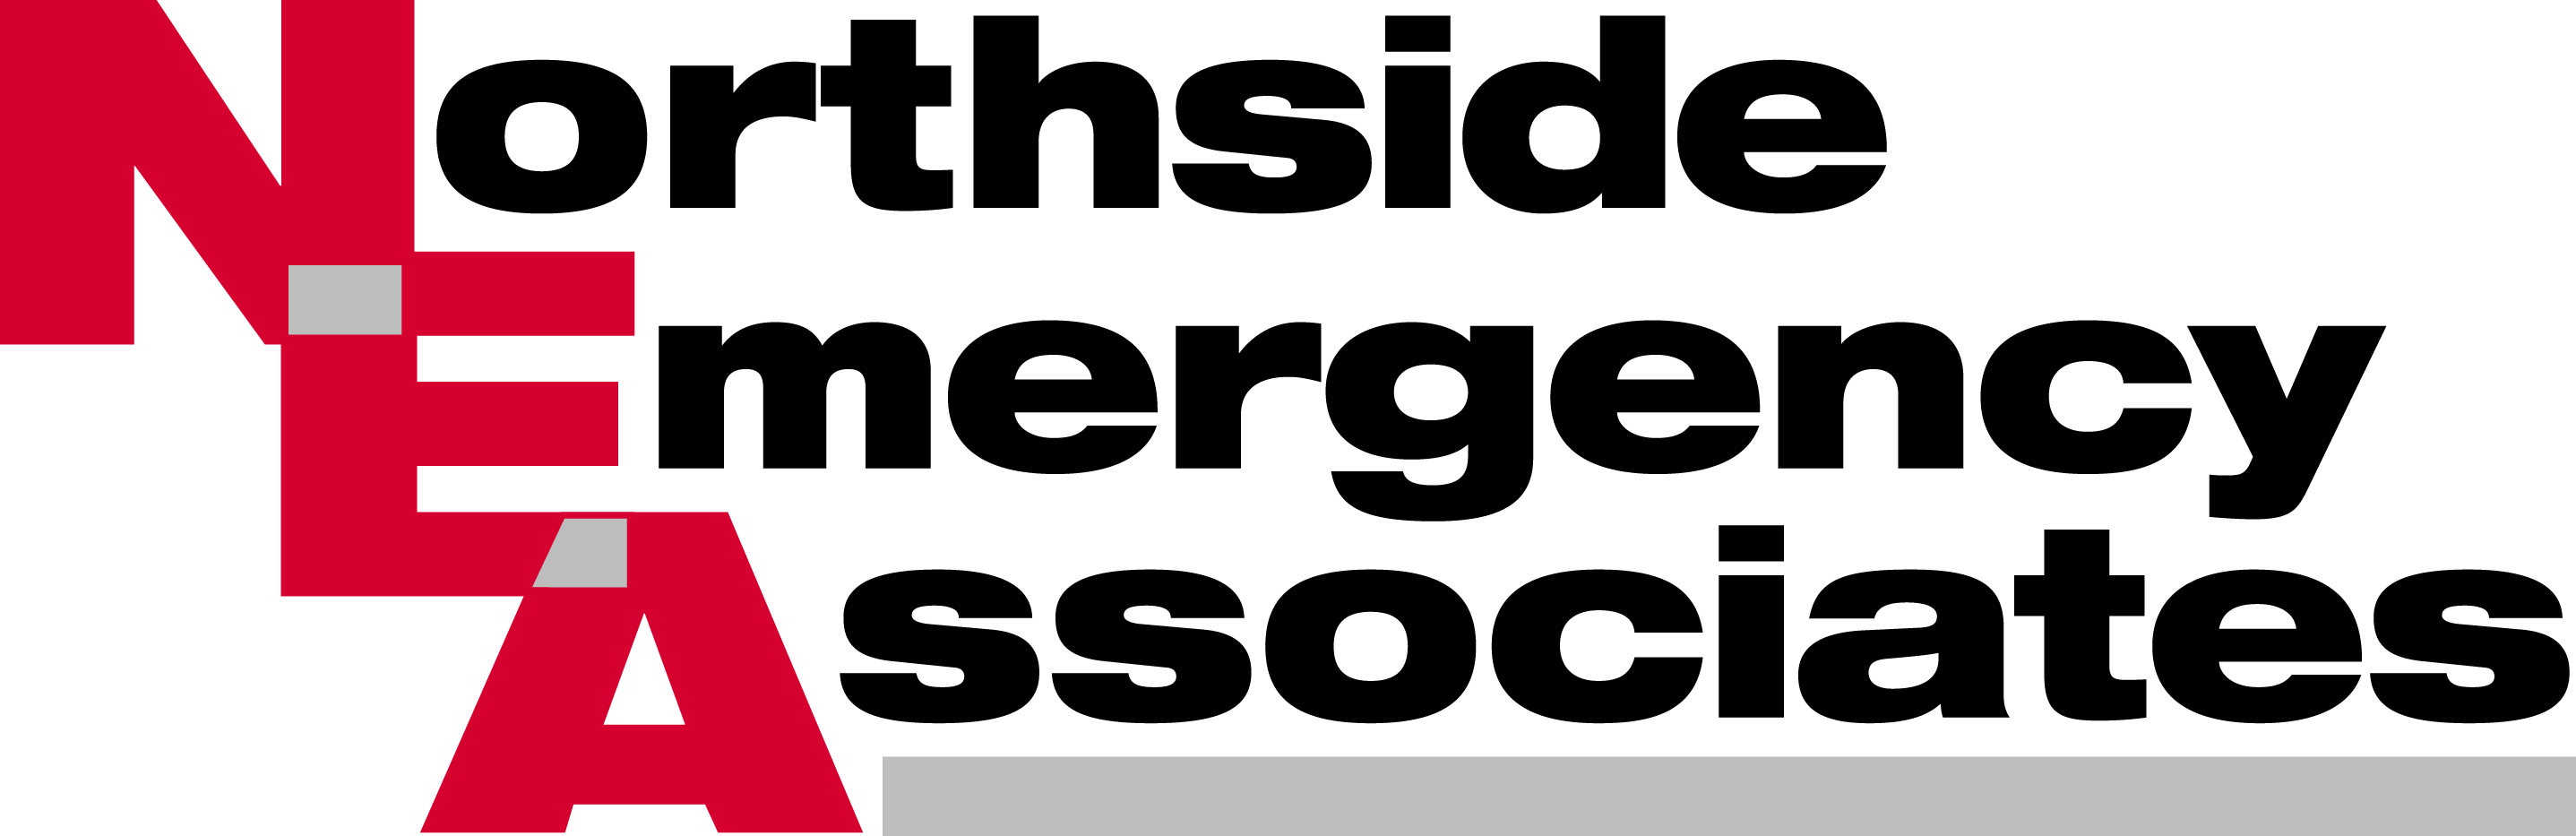 northside emergency associates logo